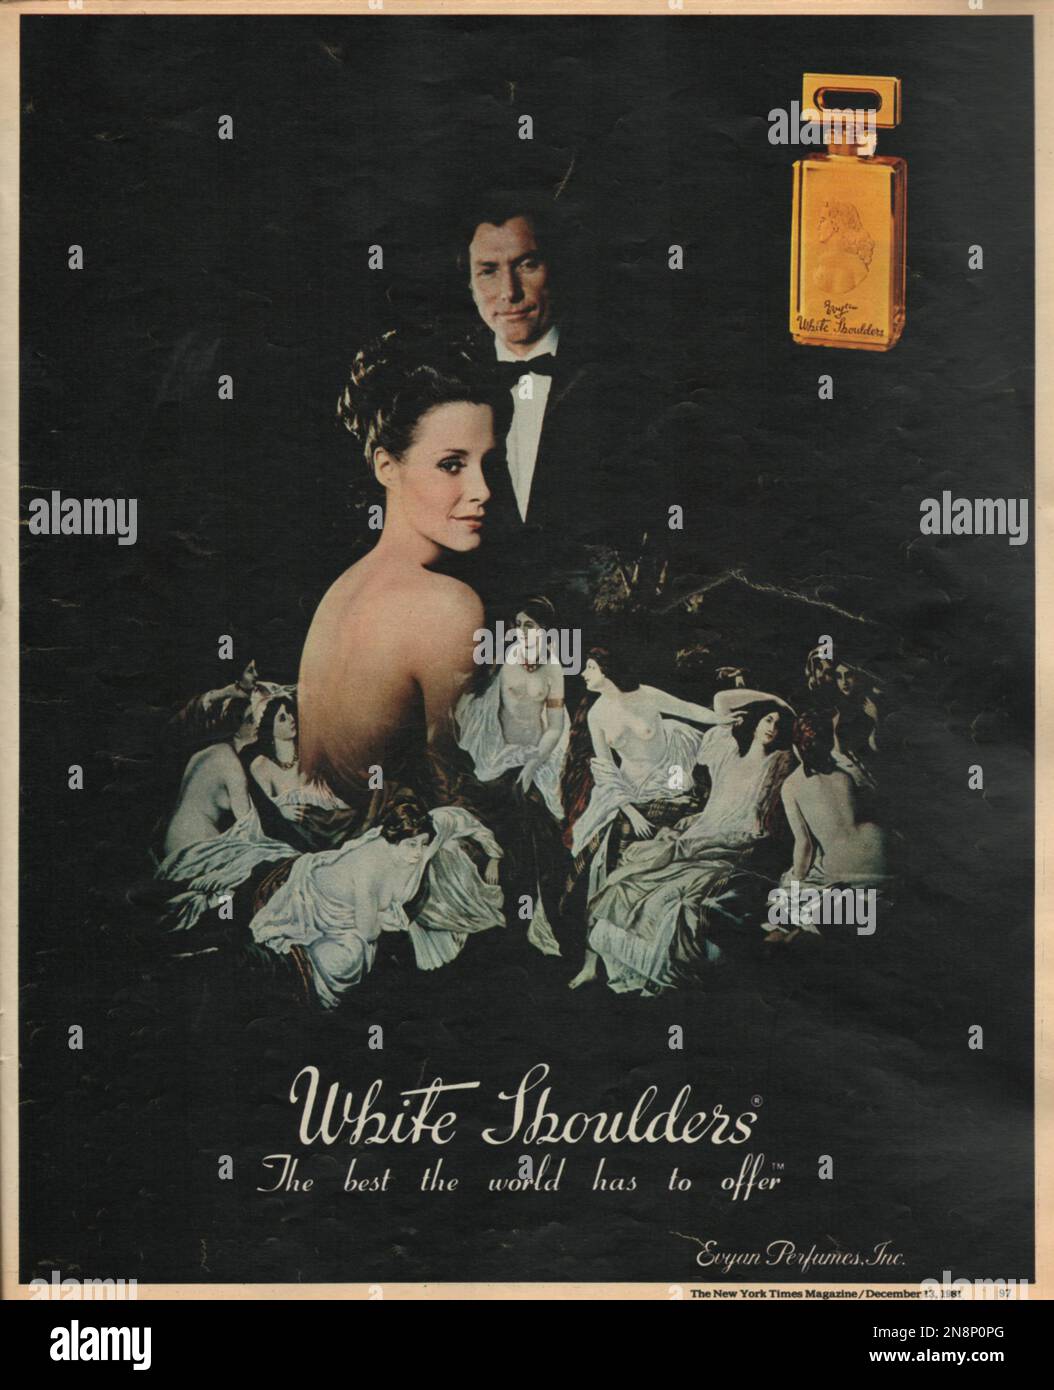 White Shoulder Evyan Perfumes, Incmagazine advertisement 1981, paper advert The New York Times magazine Stock Photo